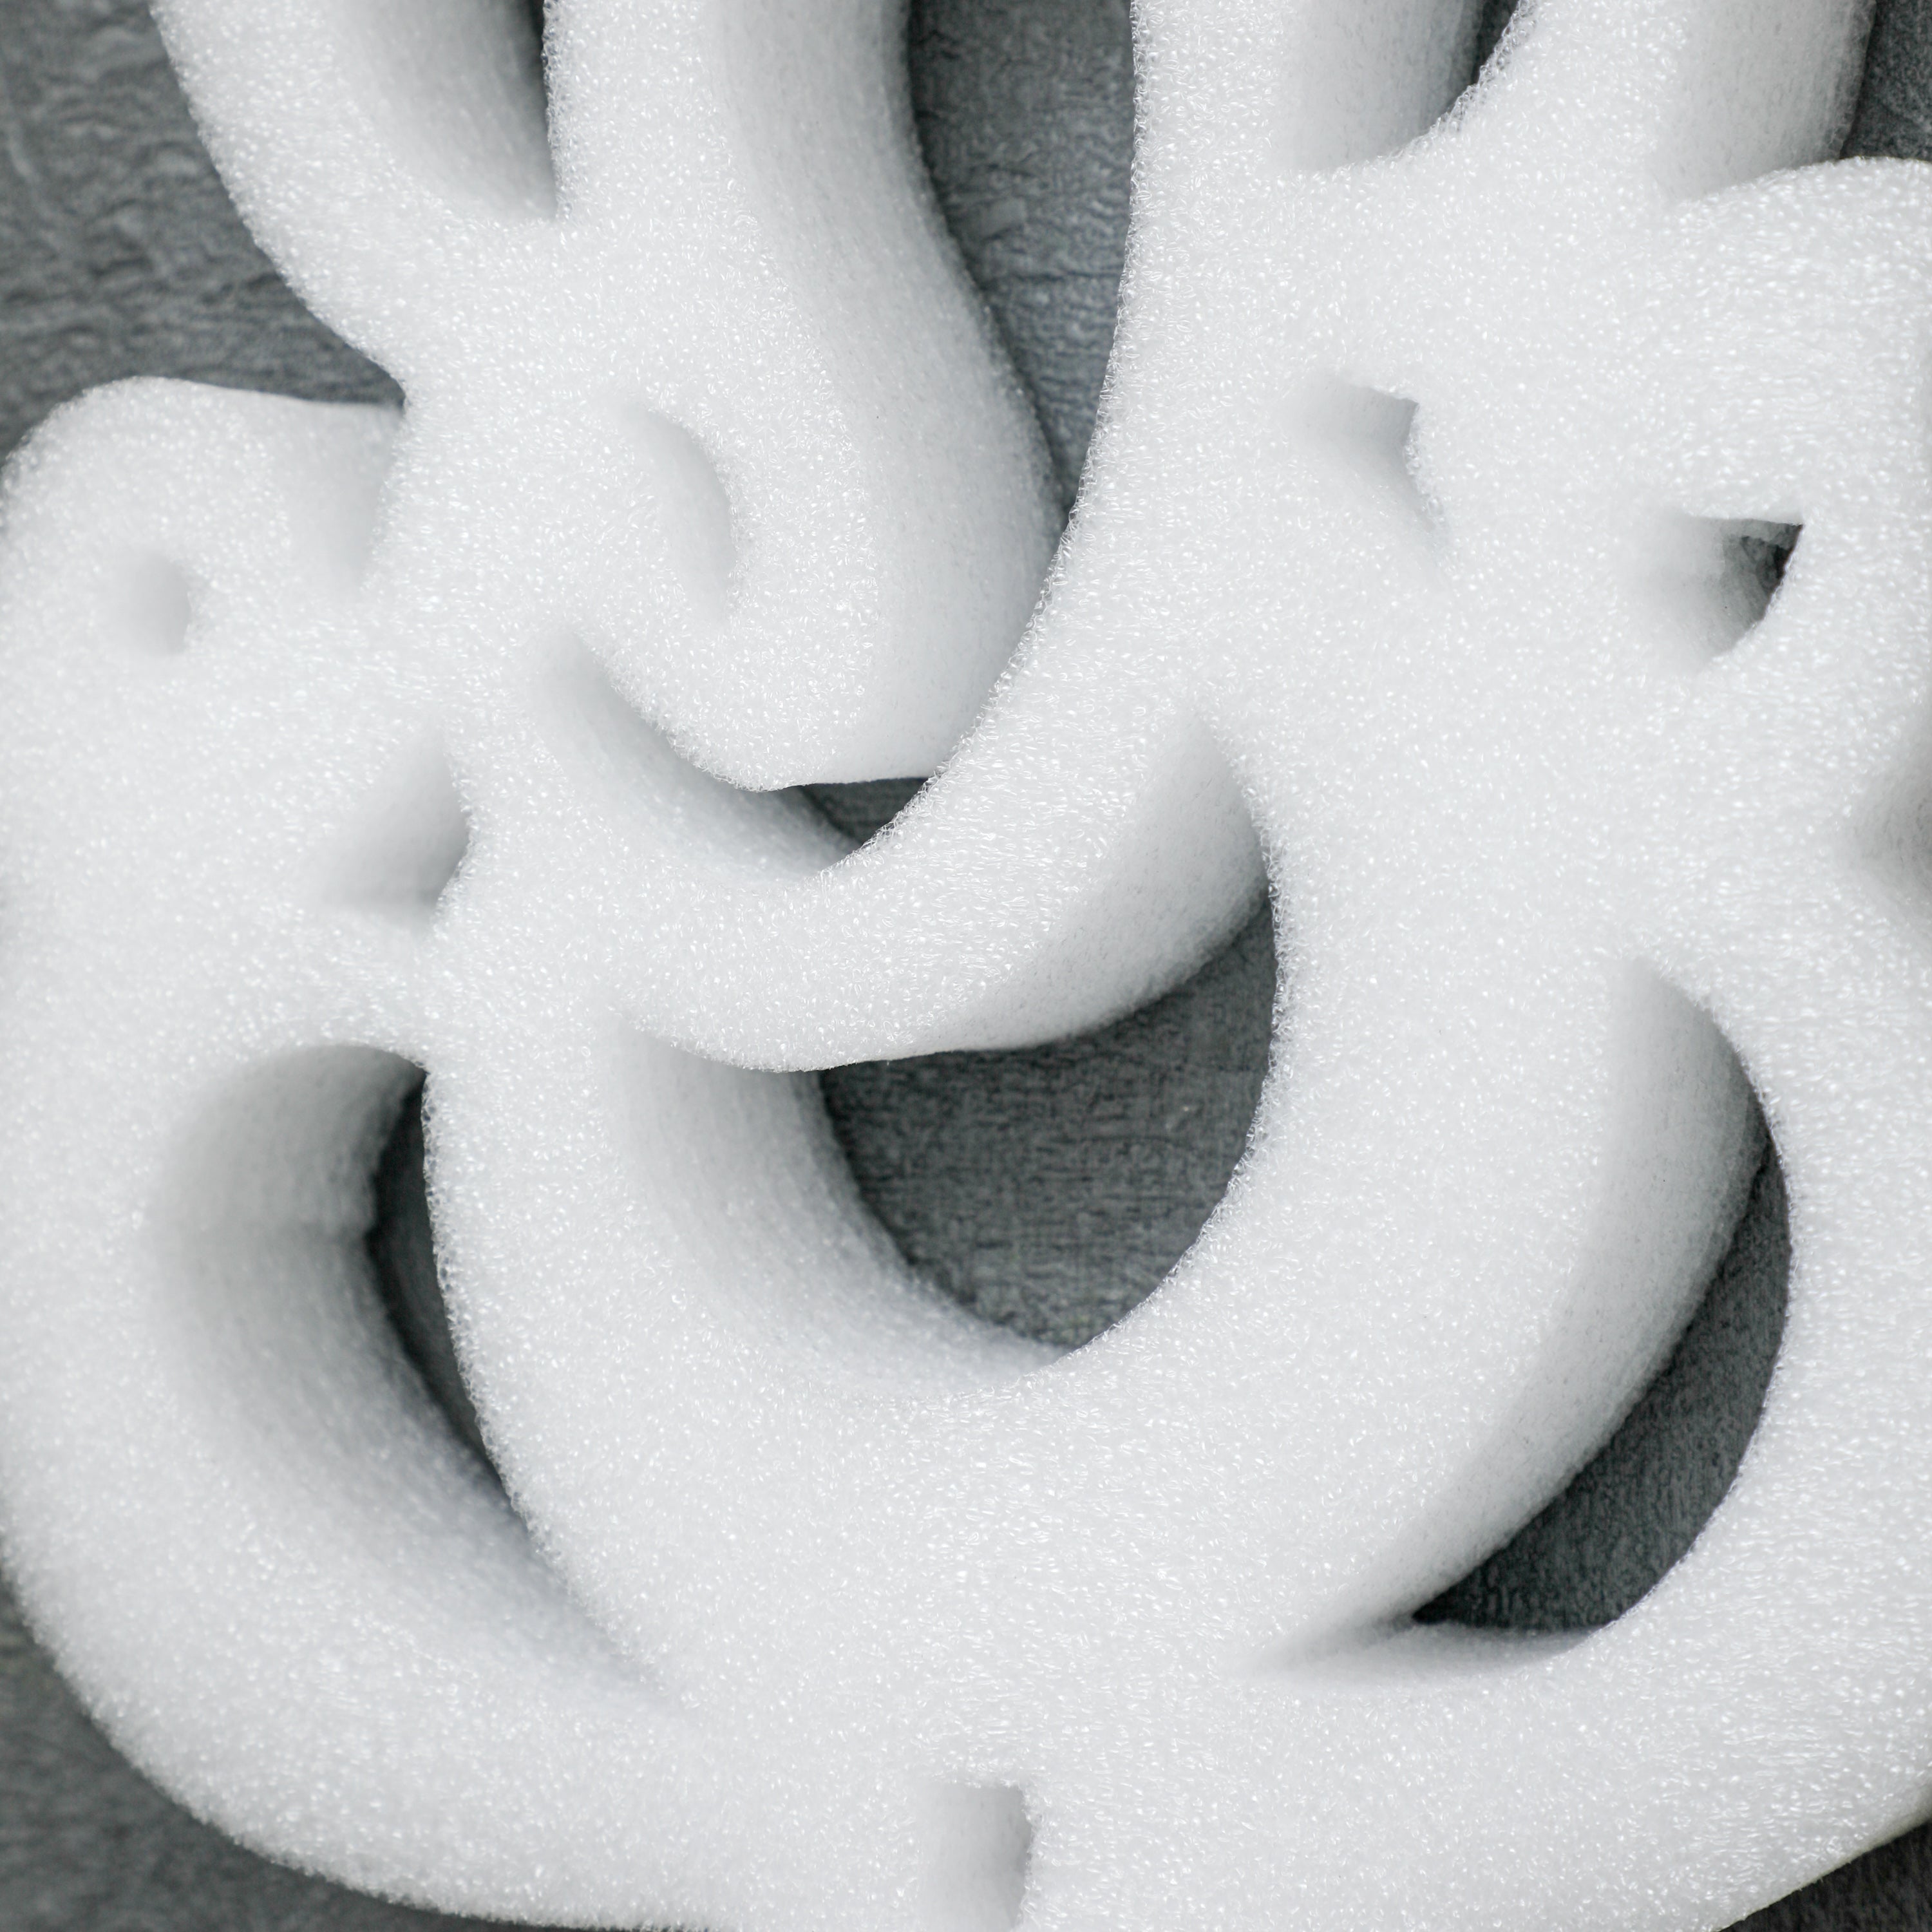 This Ganesh cutout is made of EVA foam sheets